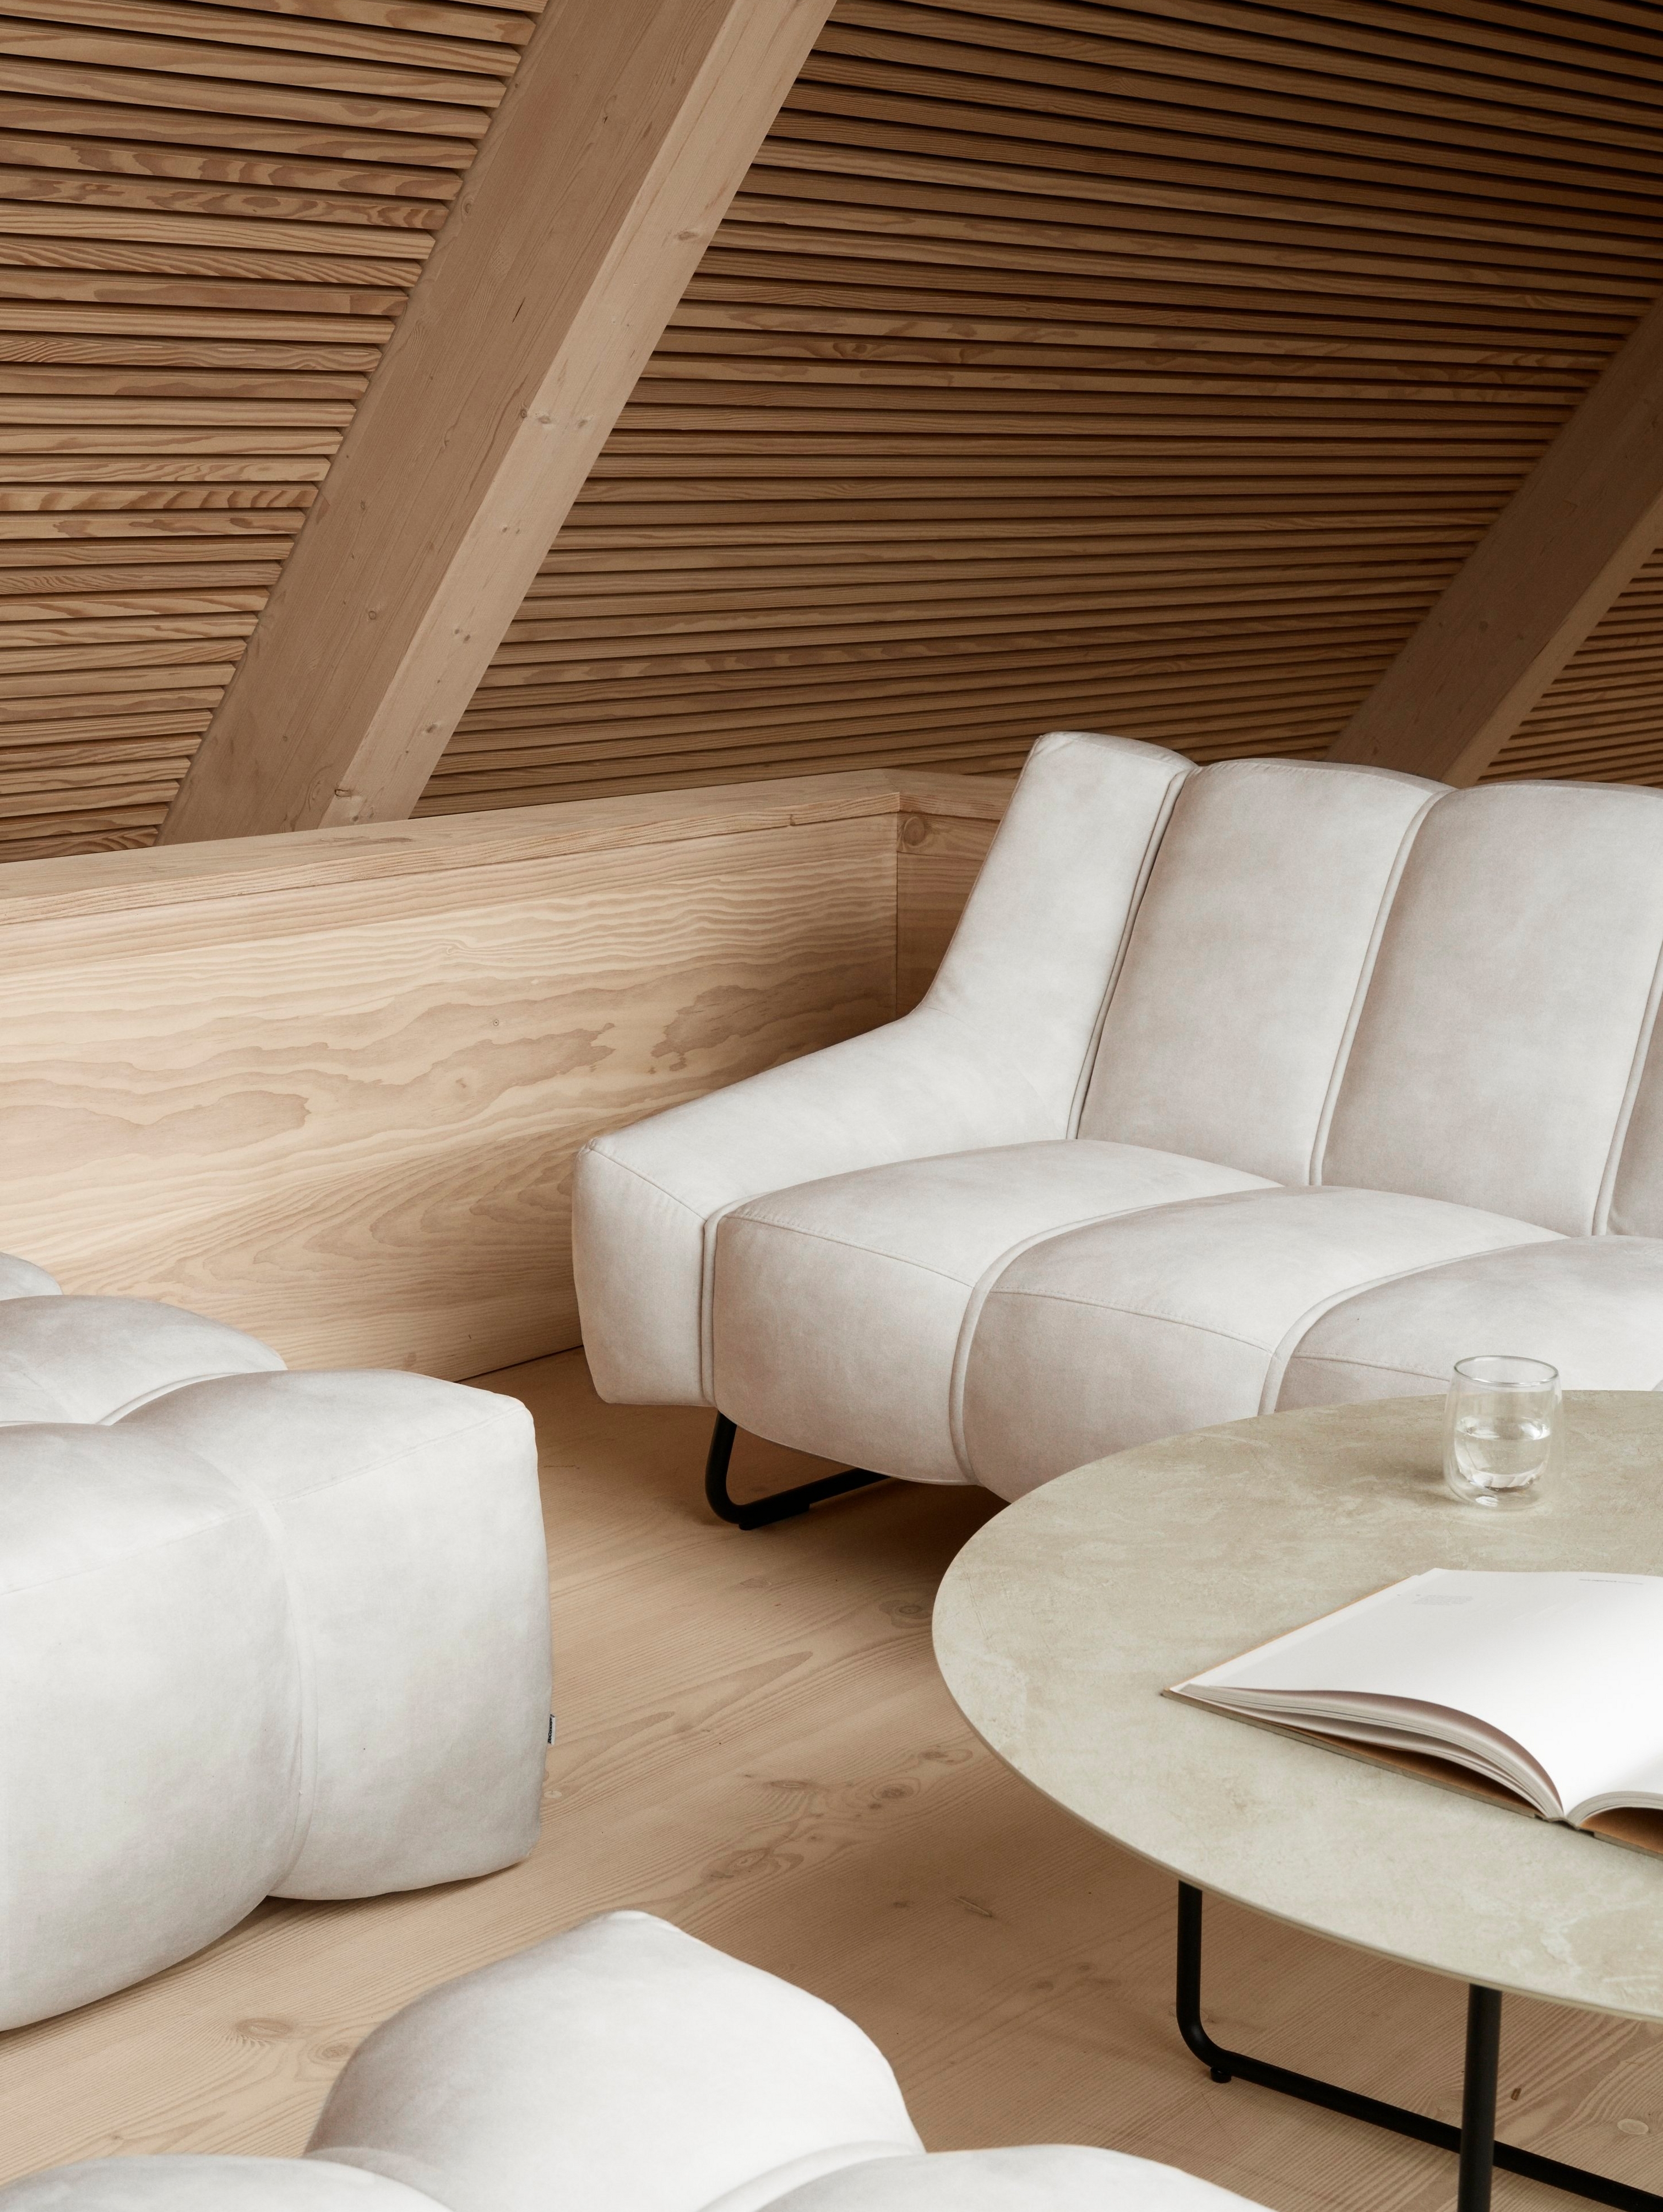 Nawabari 沙发和配套脚凳打造斯堪的纳维亚风格的起居室。